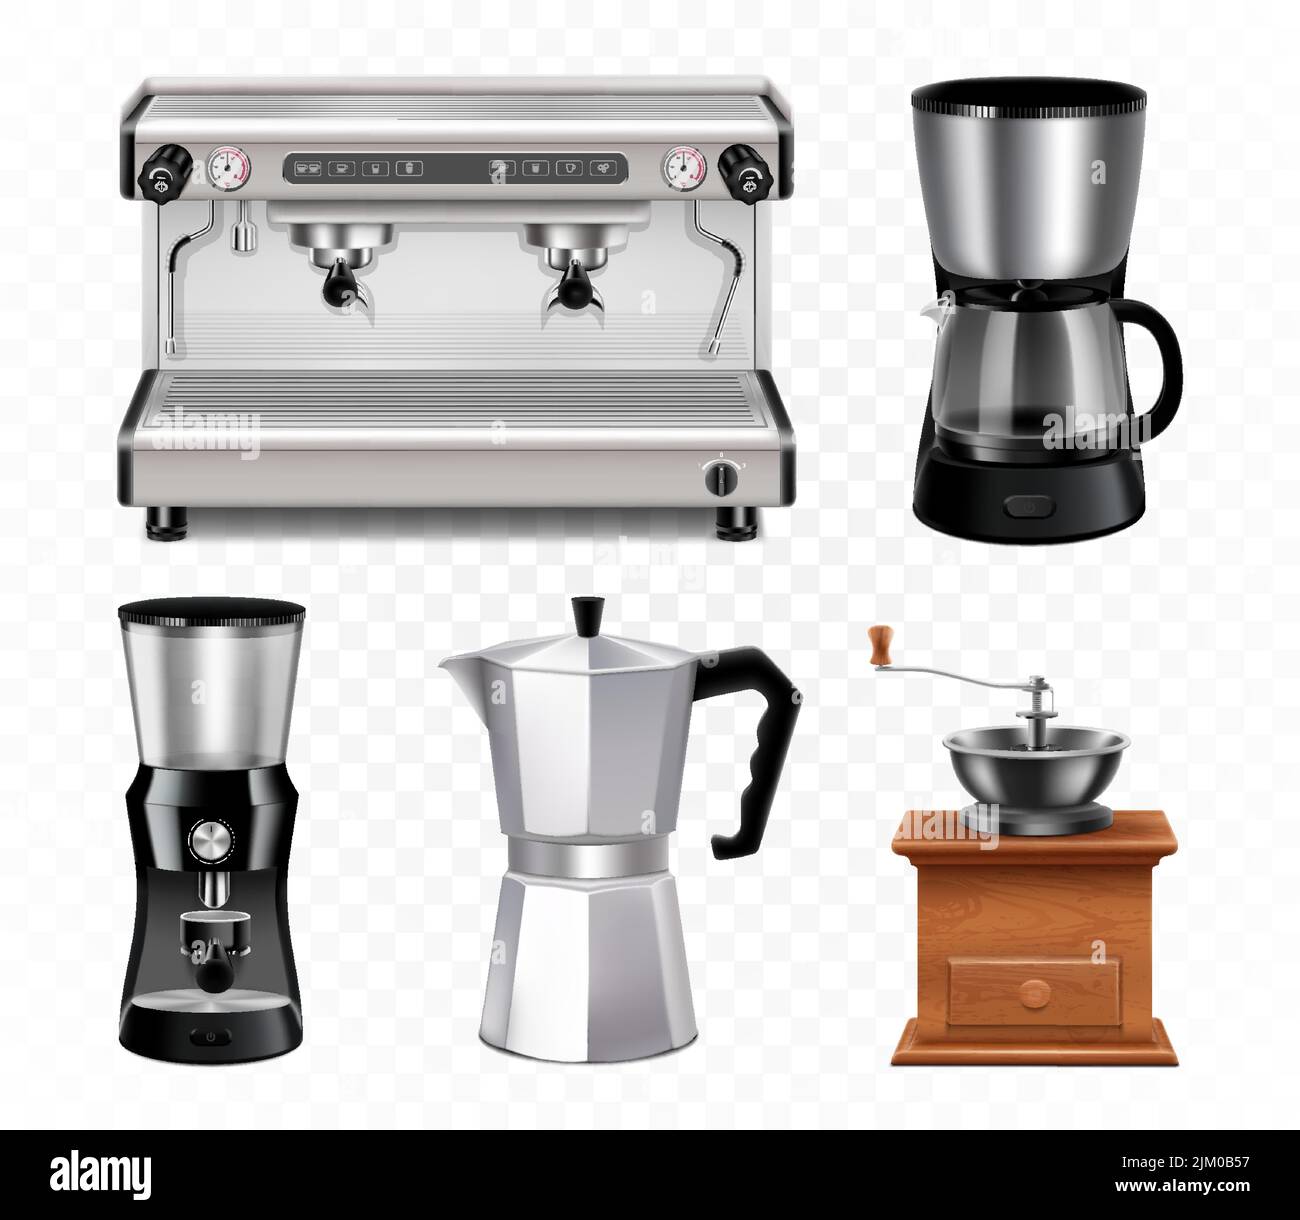 https://c8.alamy.com/comp/2JM0B57/different-types-of-coffee-makers-and-coffee-machines-coffee-maker-professional-coffee-machine-manual-coffee-grinder-turkish-coffee-pot-realistic-2JM0B57.jpg